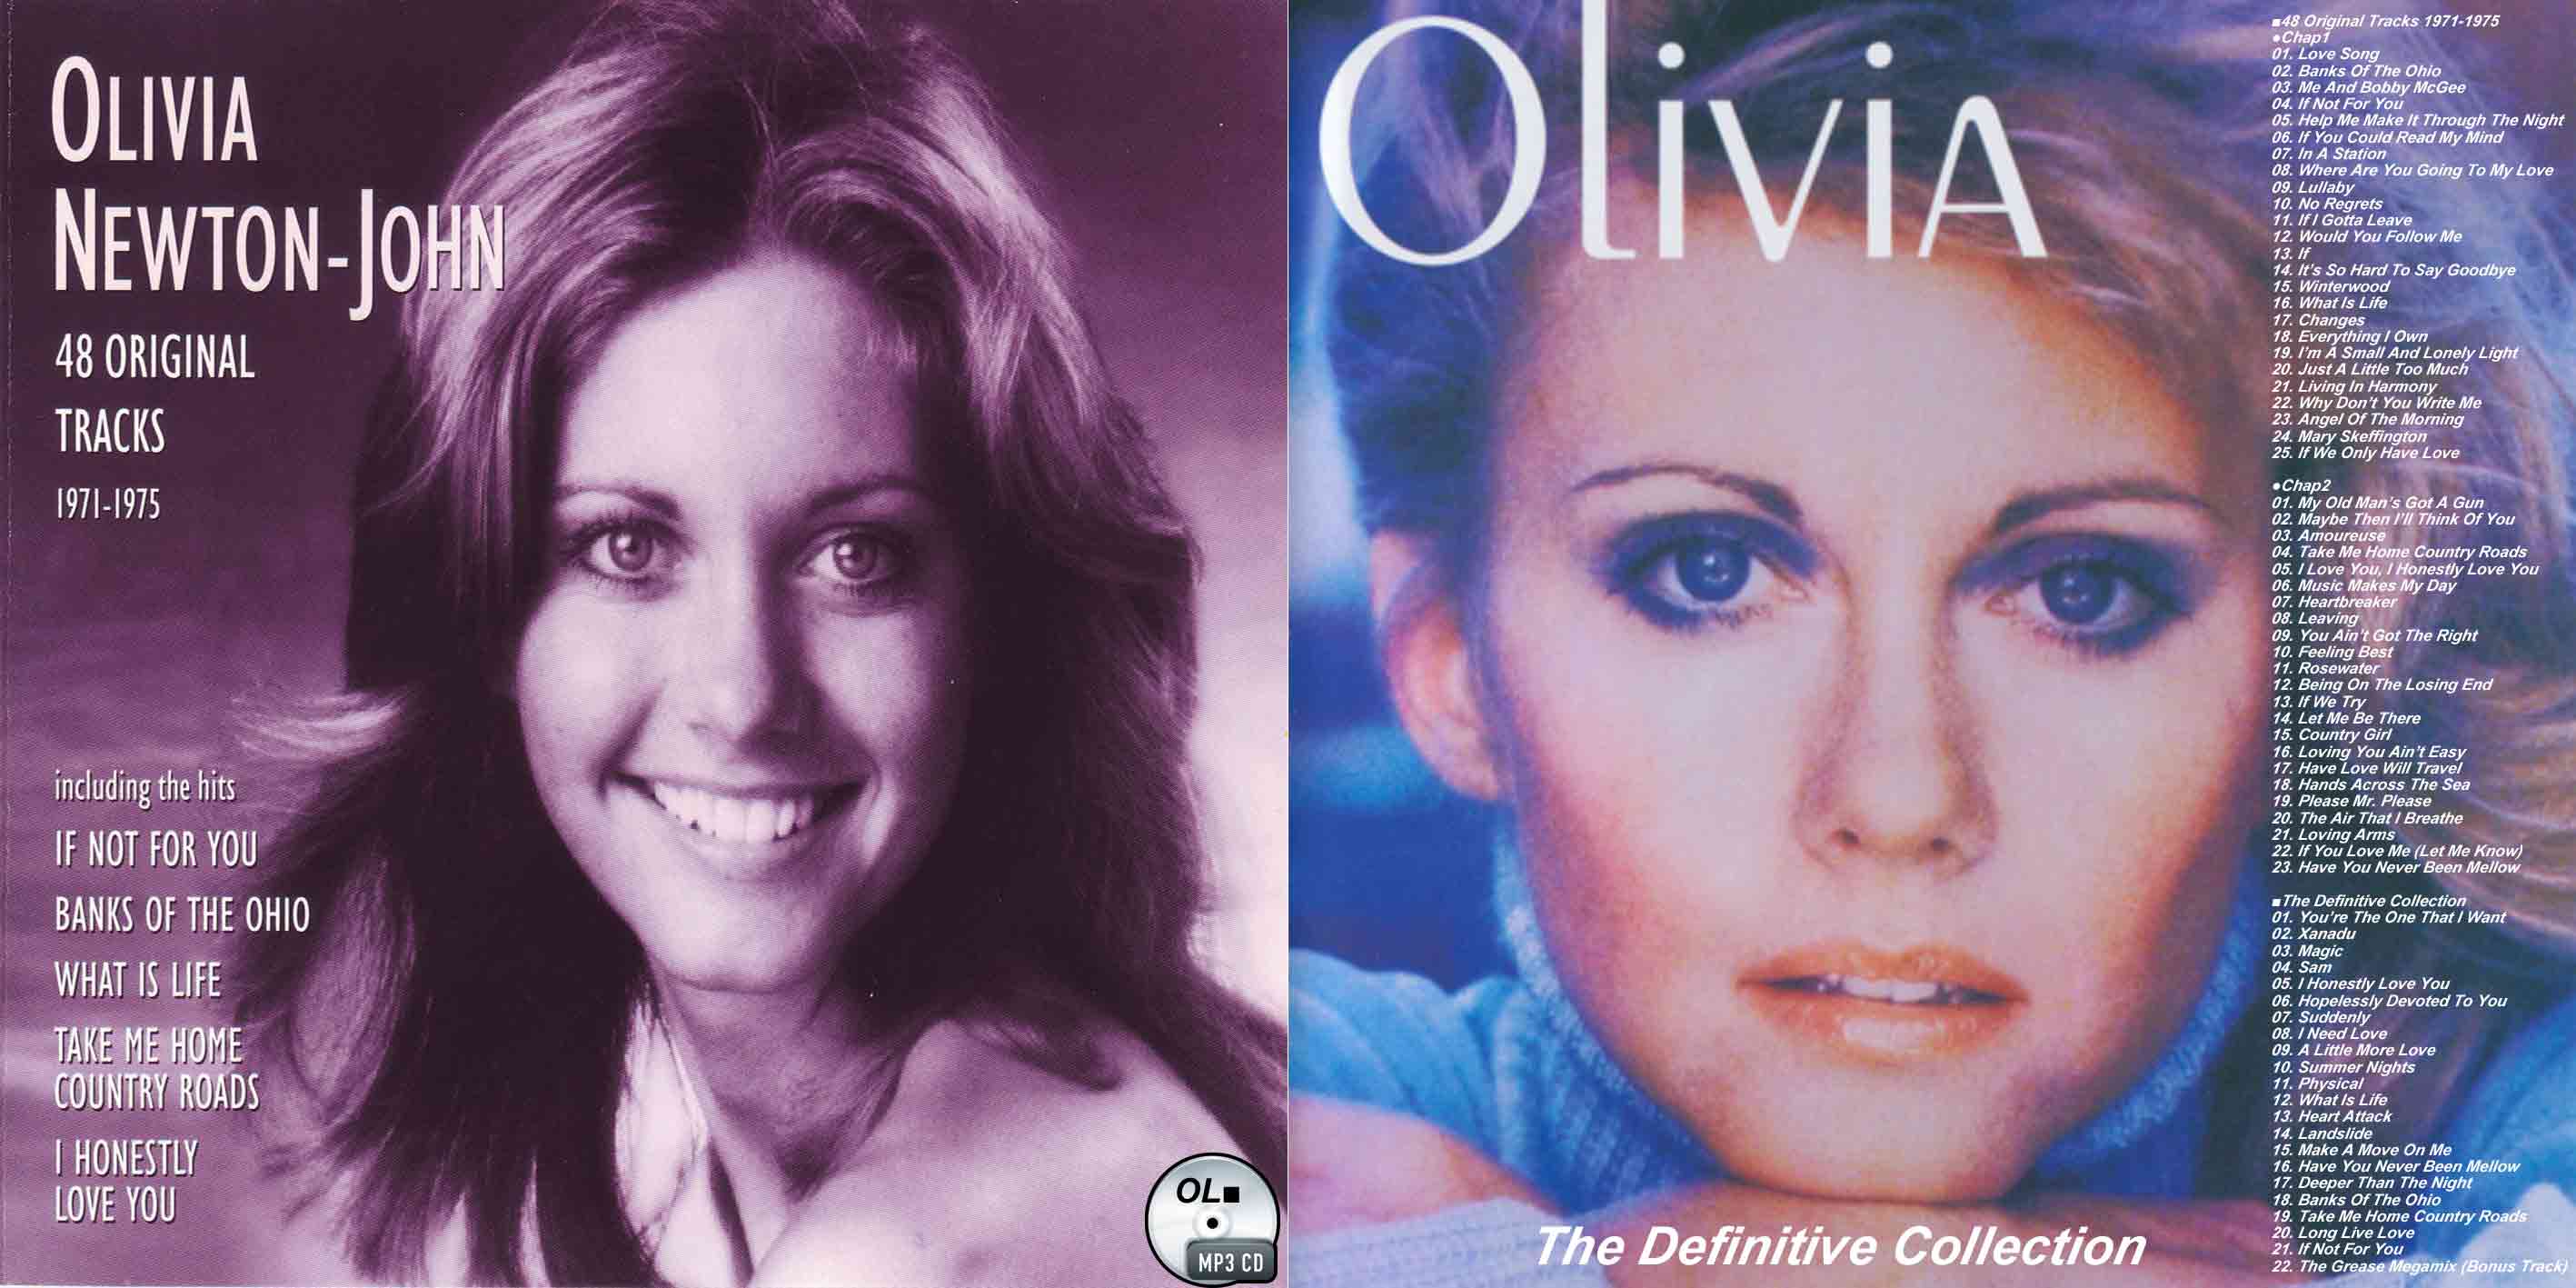 OLオリビア・ニュートンジョン 1971-1975 +Definitive Collection Olivia Newton-John MP3 CD  - souflesｈ 音楽工房